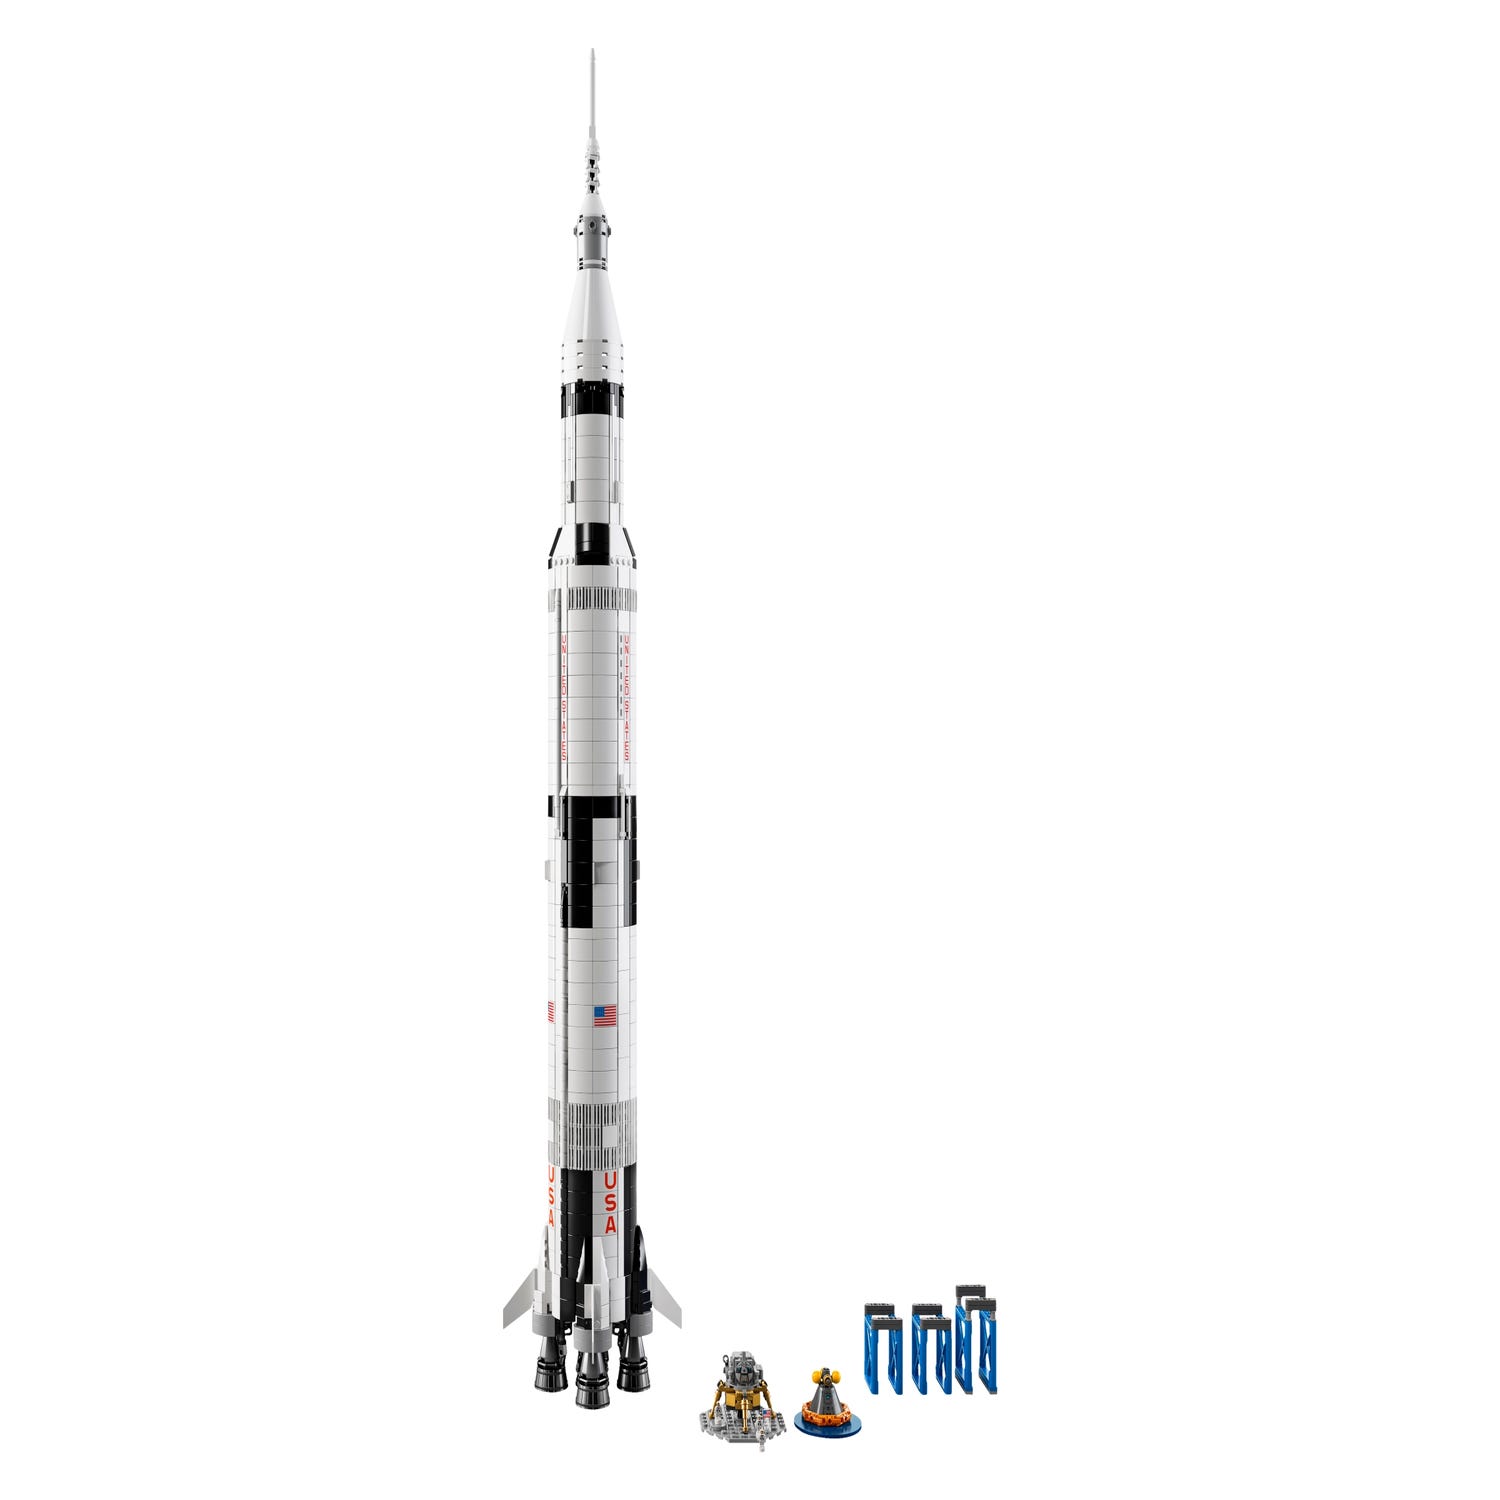 Lego Nasa Apollo Saturn V Ideas Buy Online At The Official Lego Shop Us